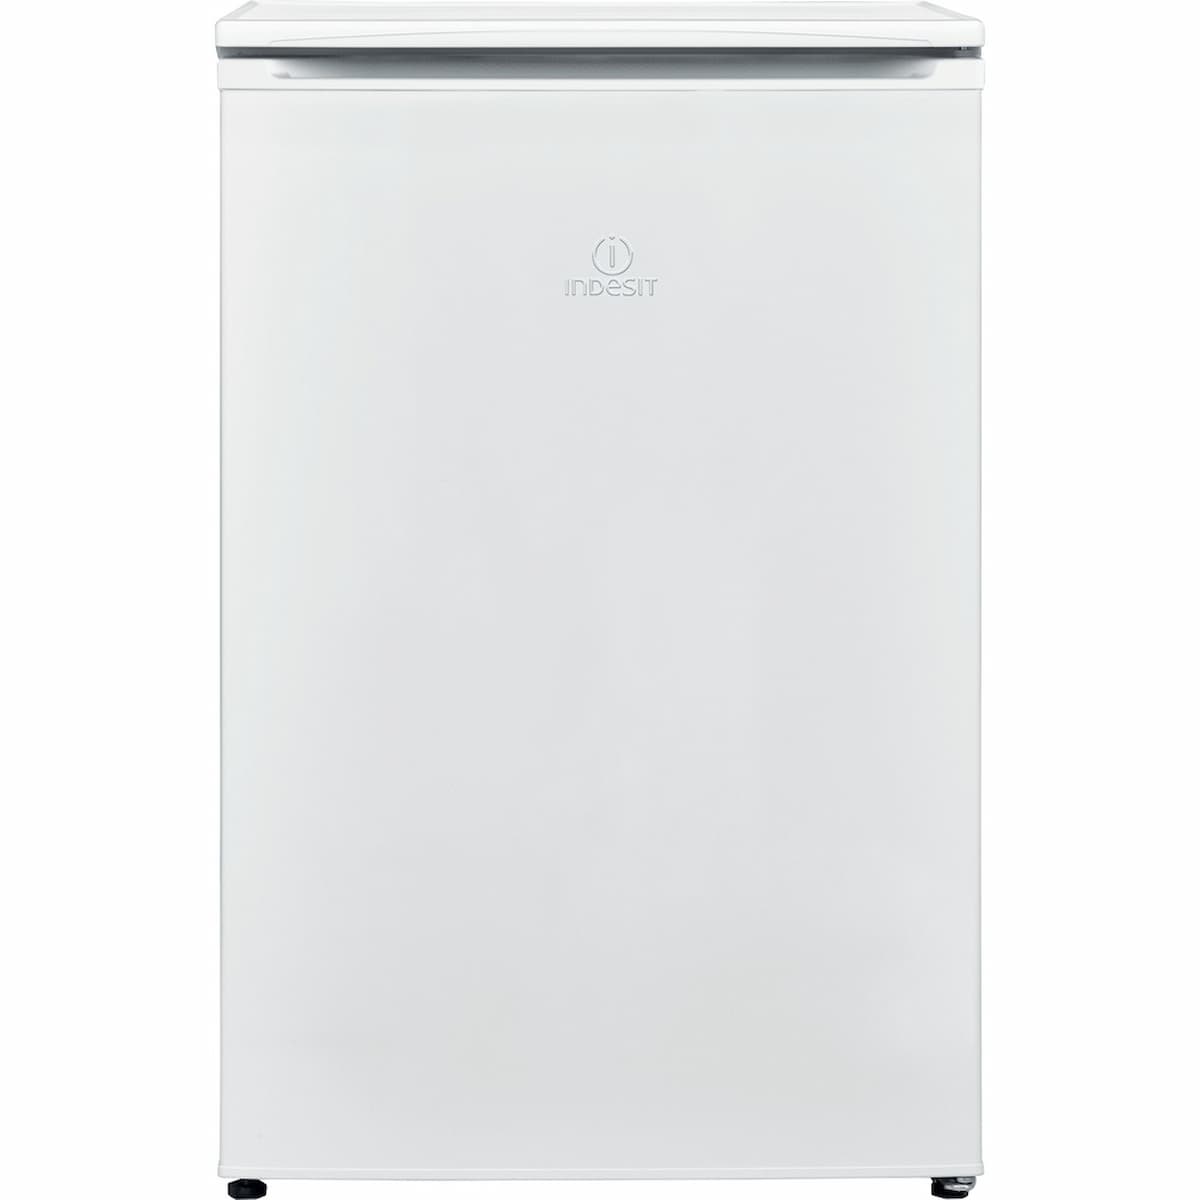 Indesit Freestanding upright freezer: white colour - I55ZM 1110 W 1